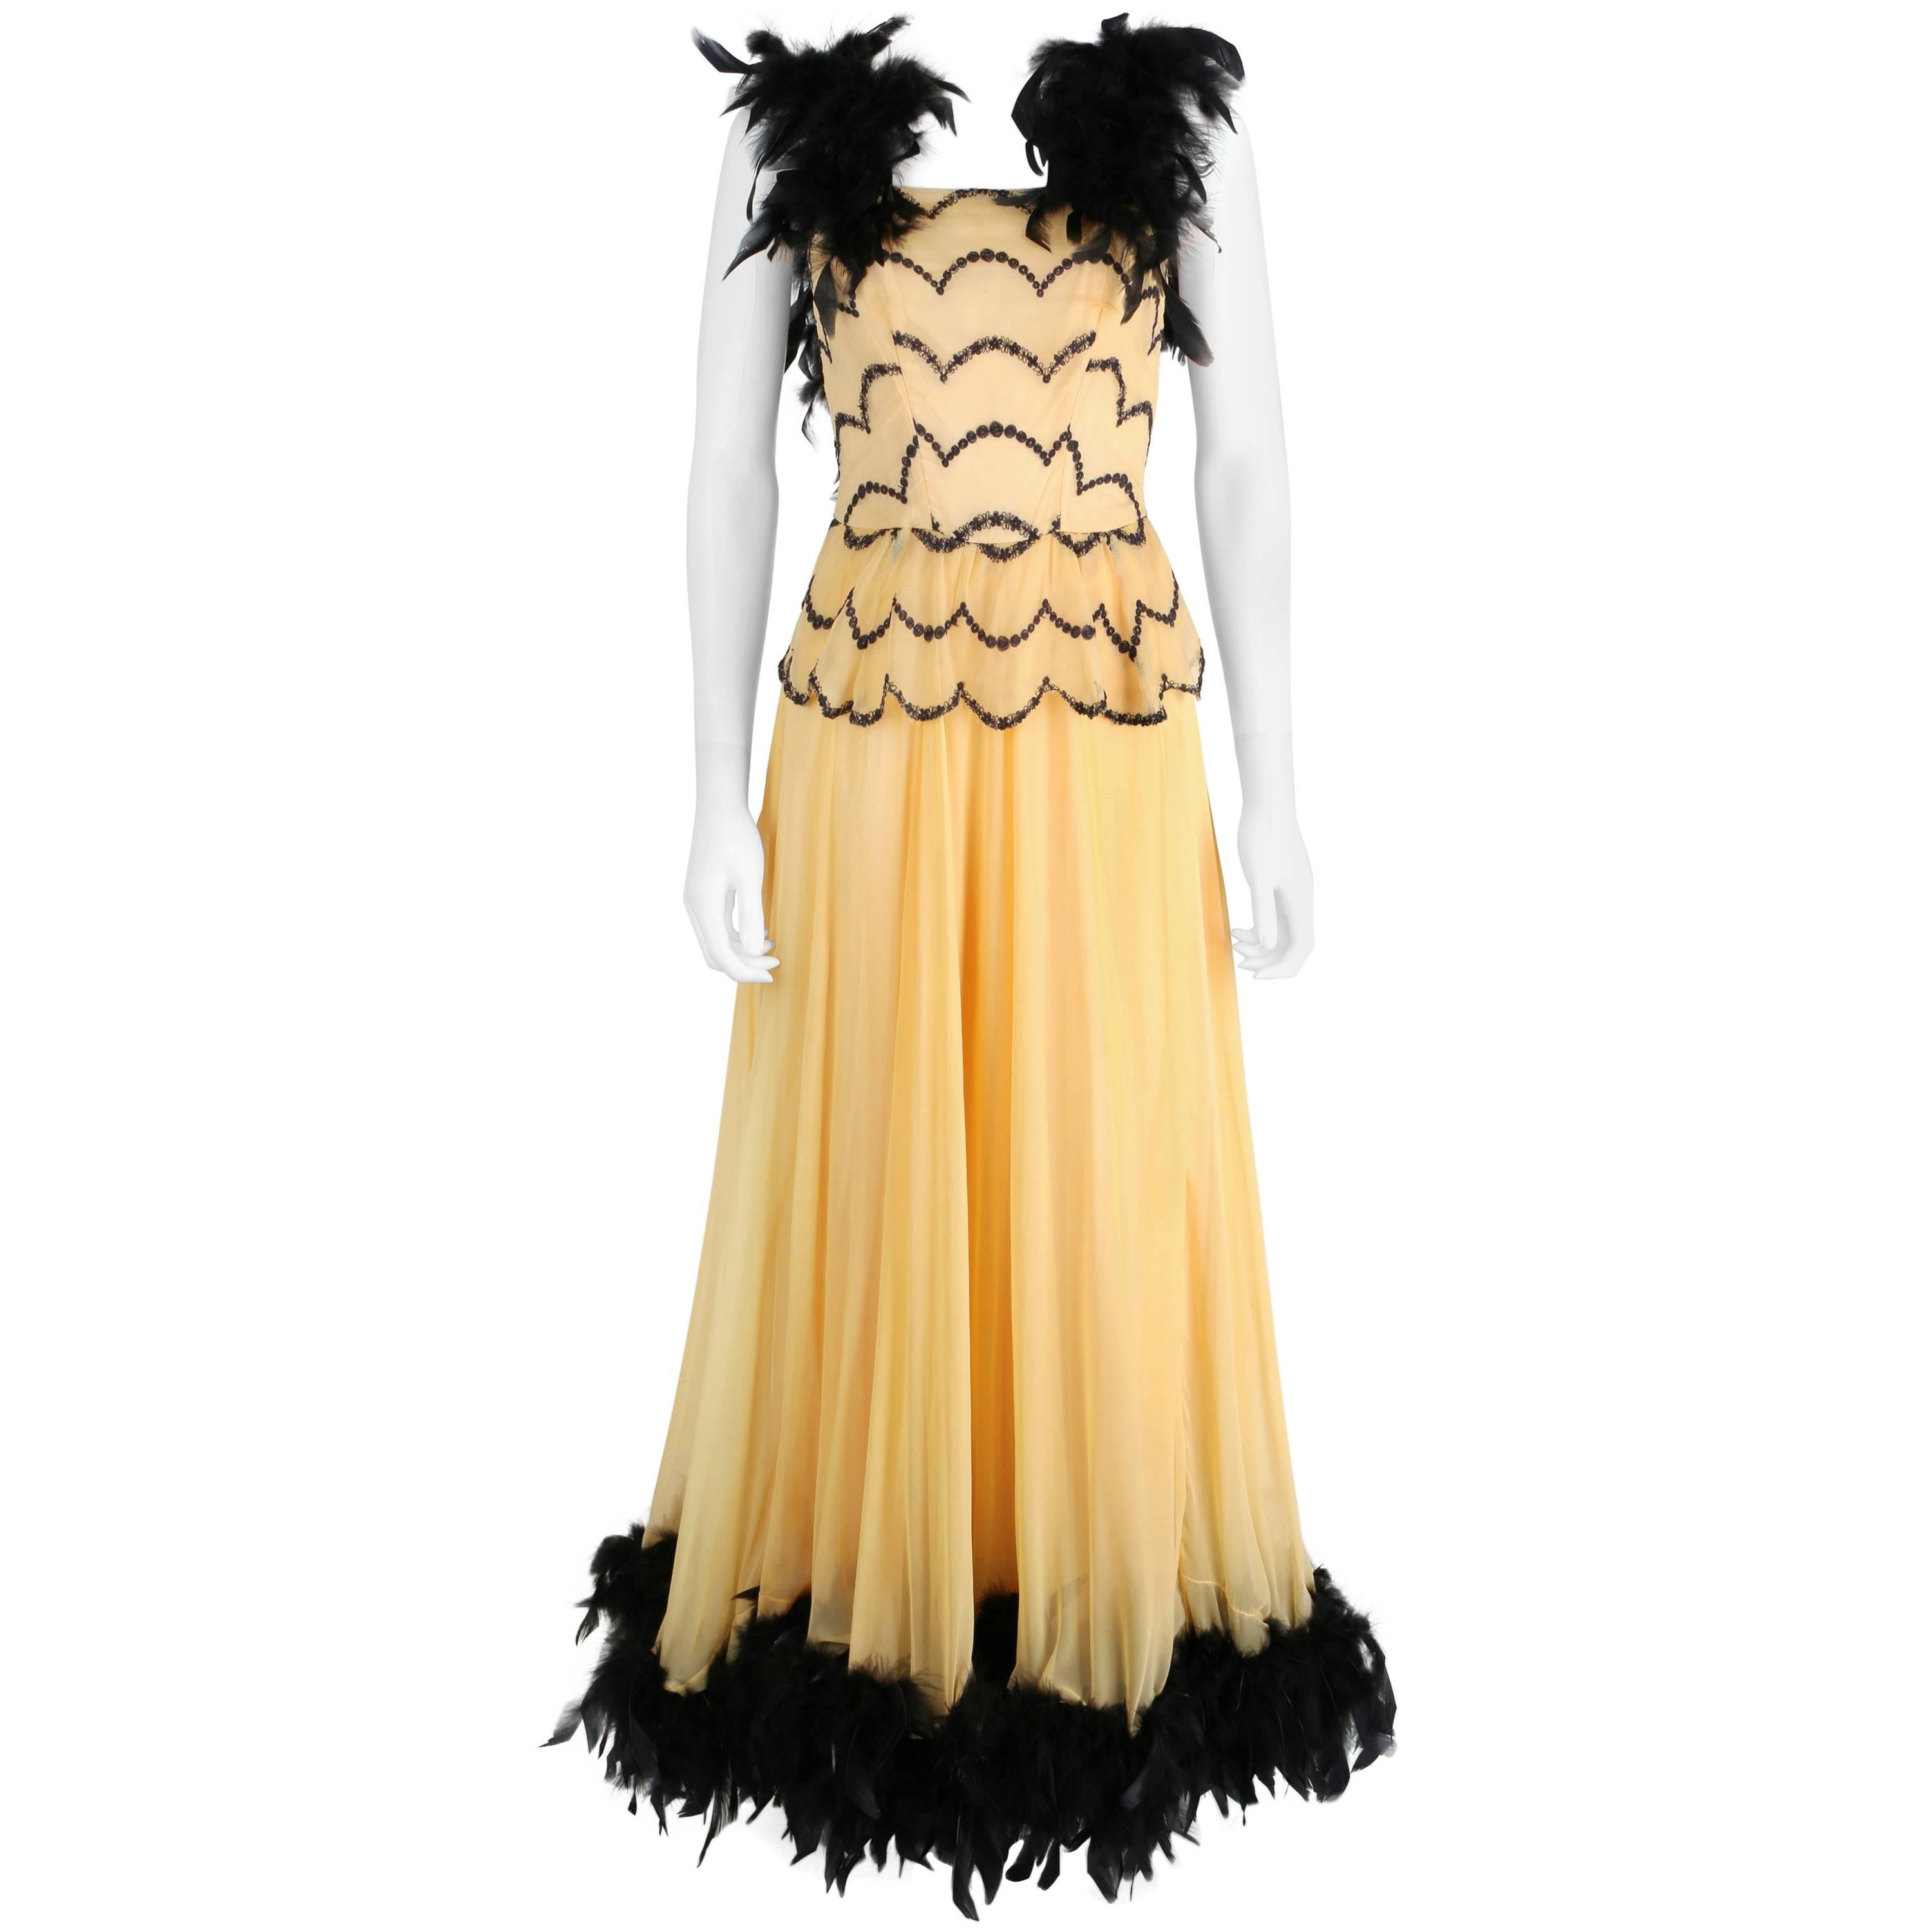 OOAK Vtg 1930's - 1940's Black Feather Trim Evening Ballroom Dance Dress Gown XS